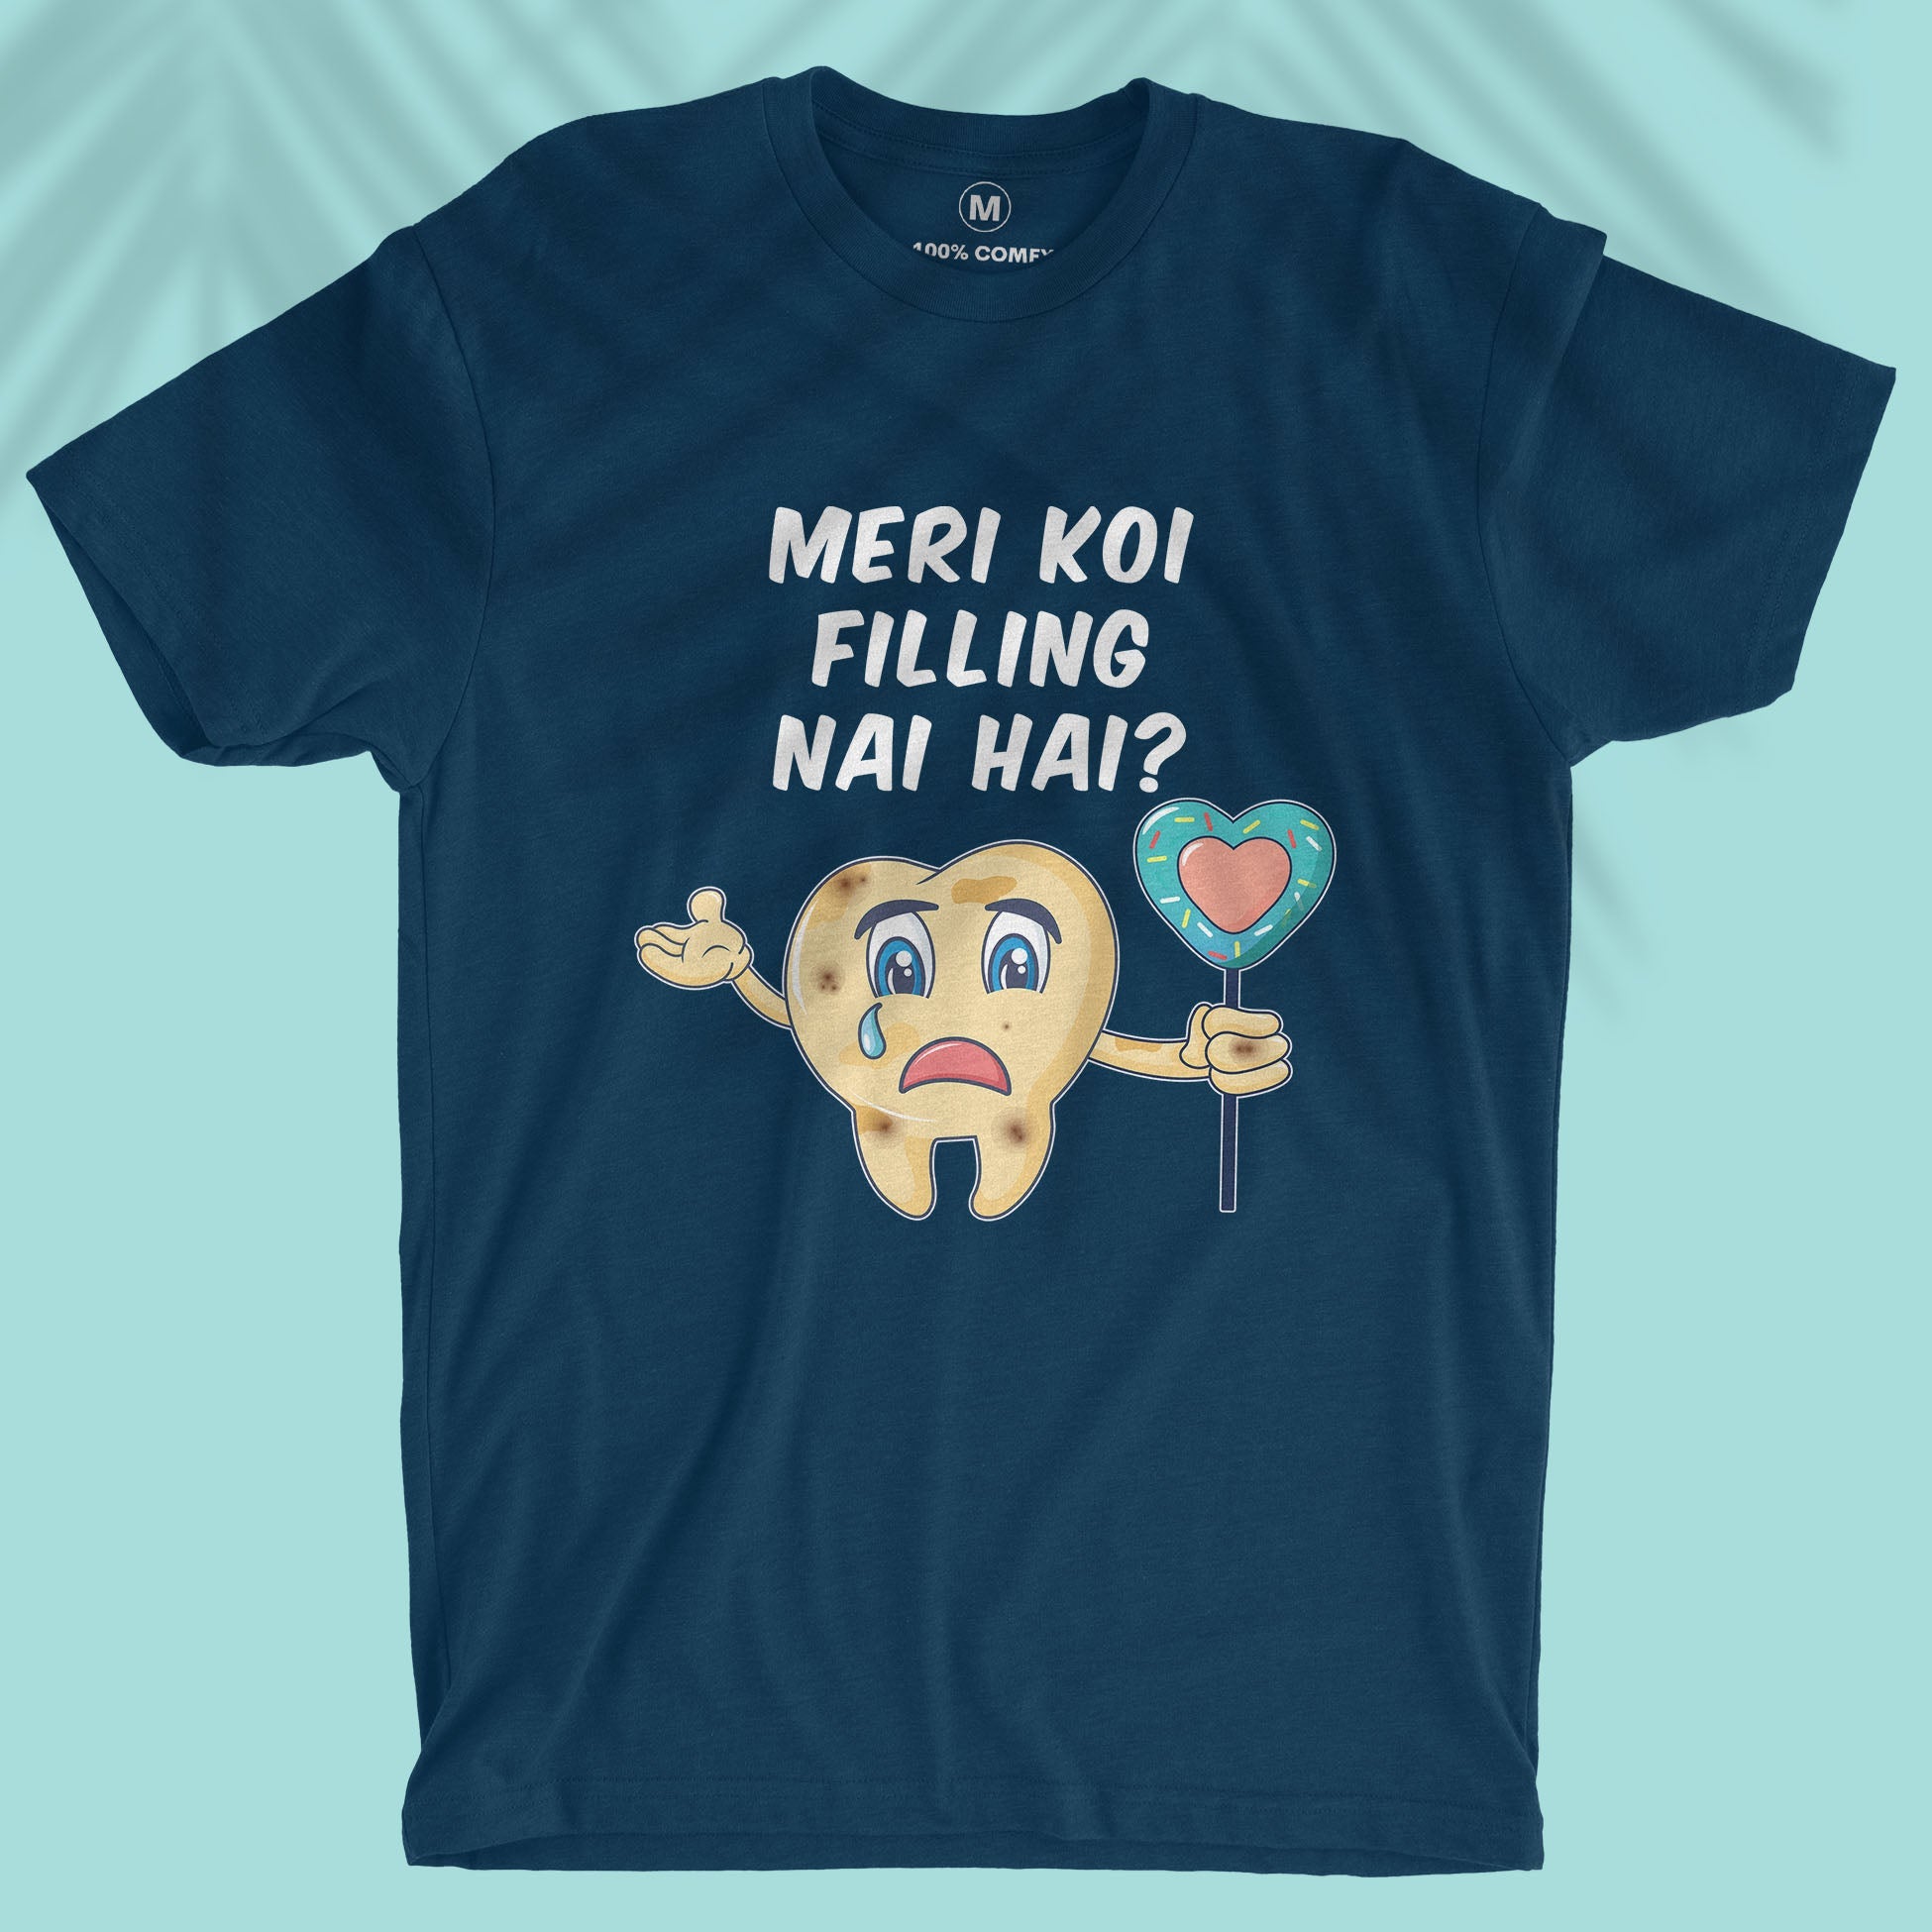 Filling - Men T-shirt